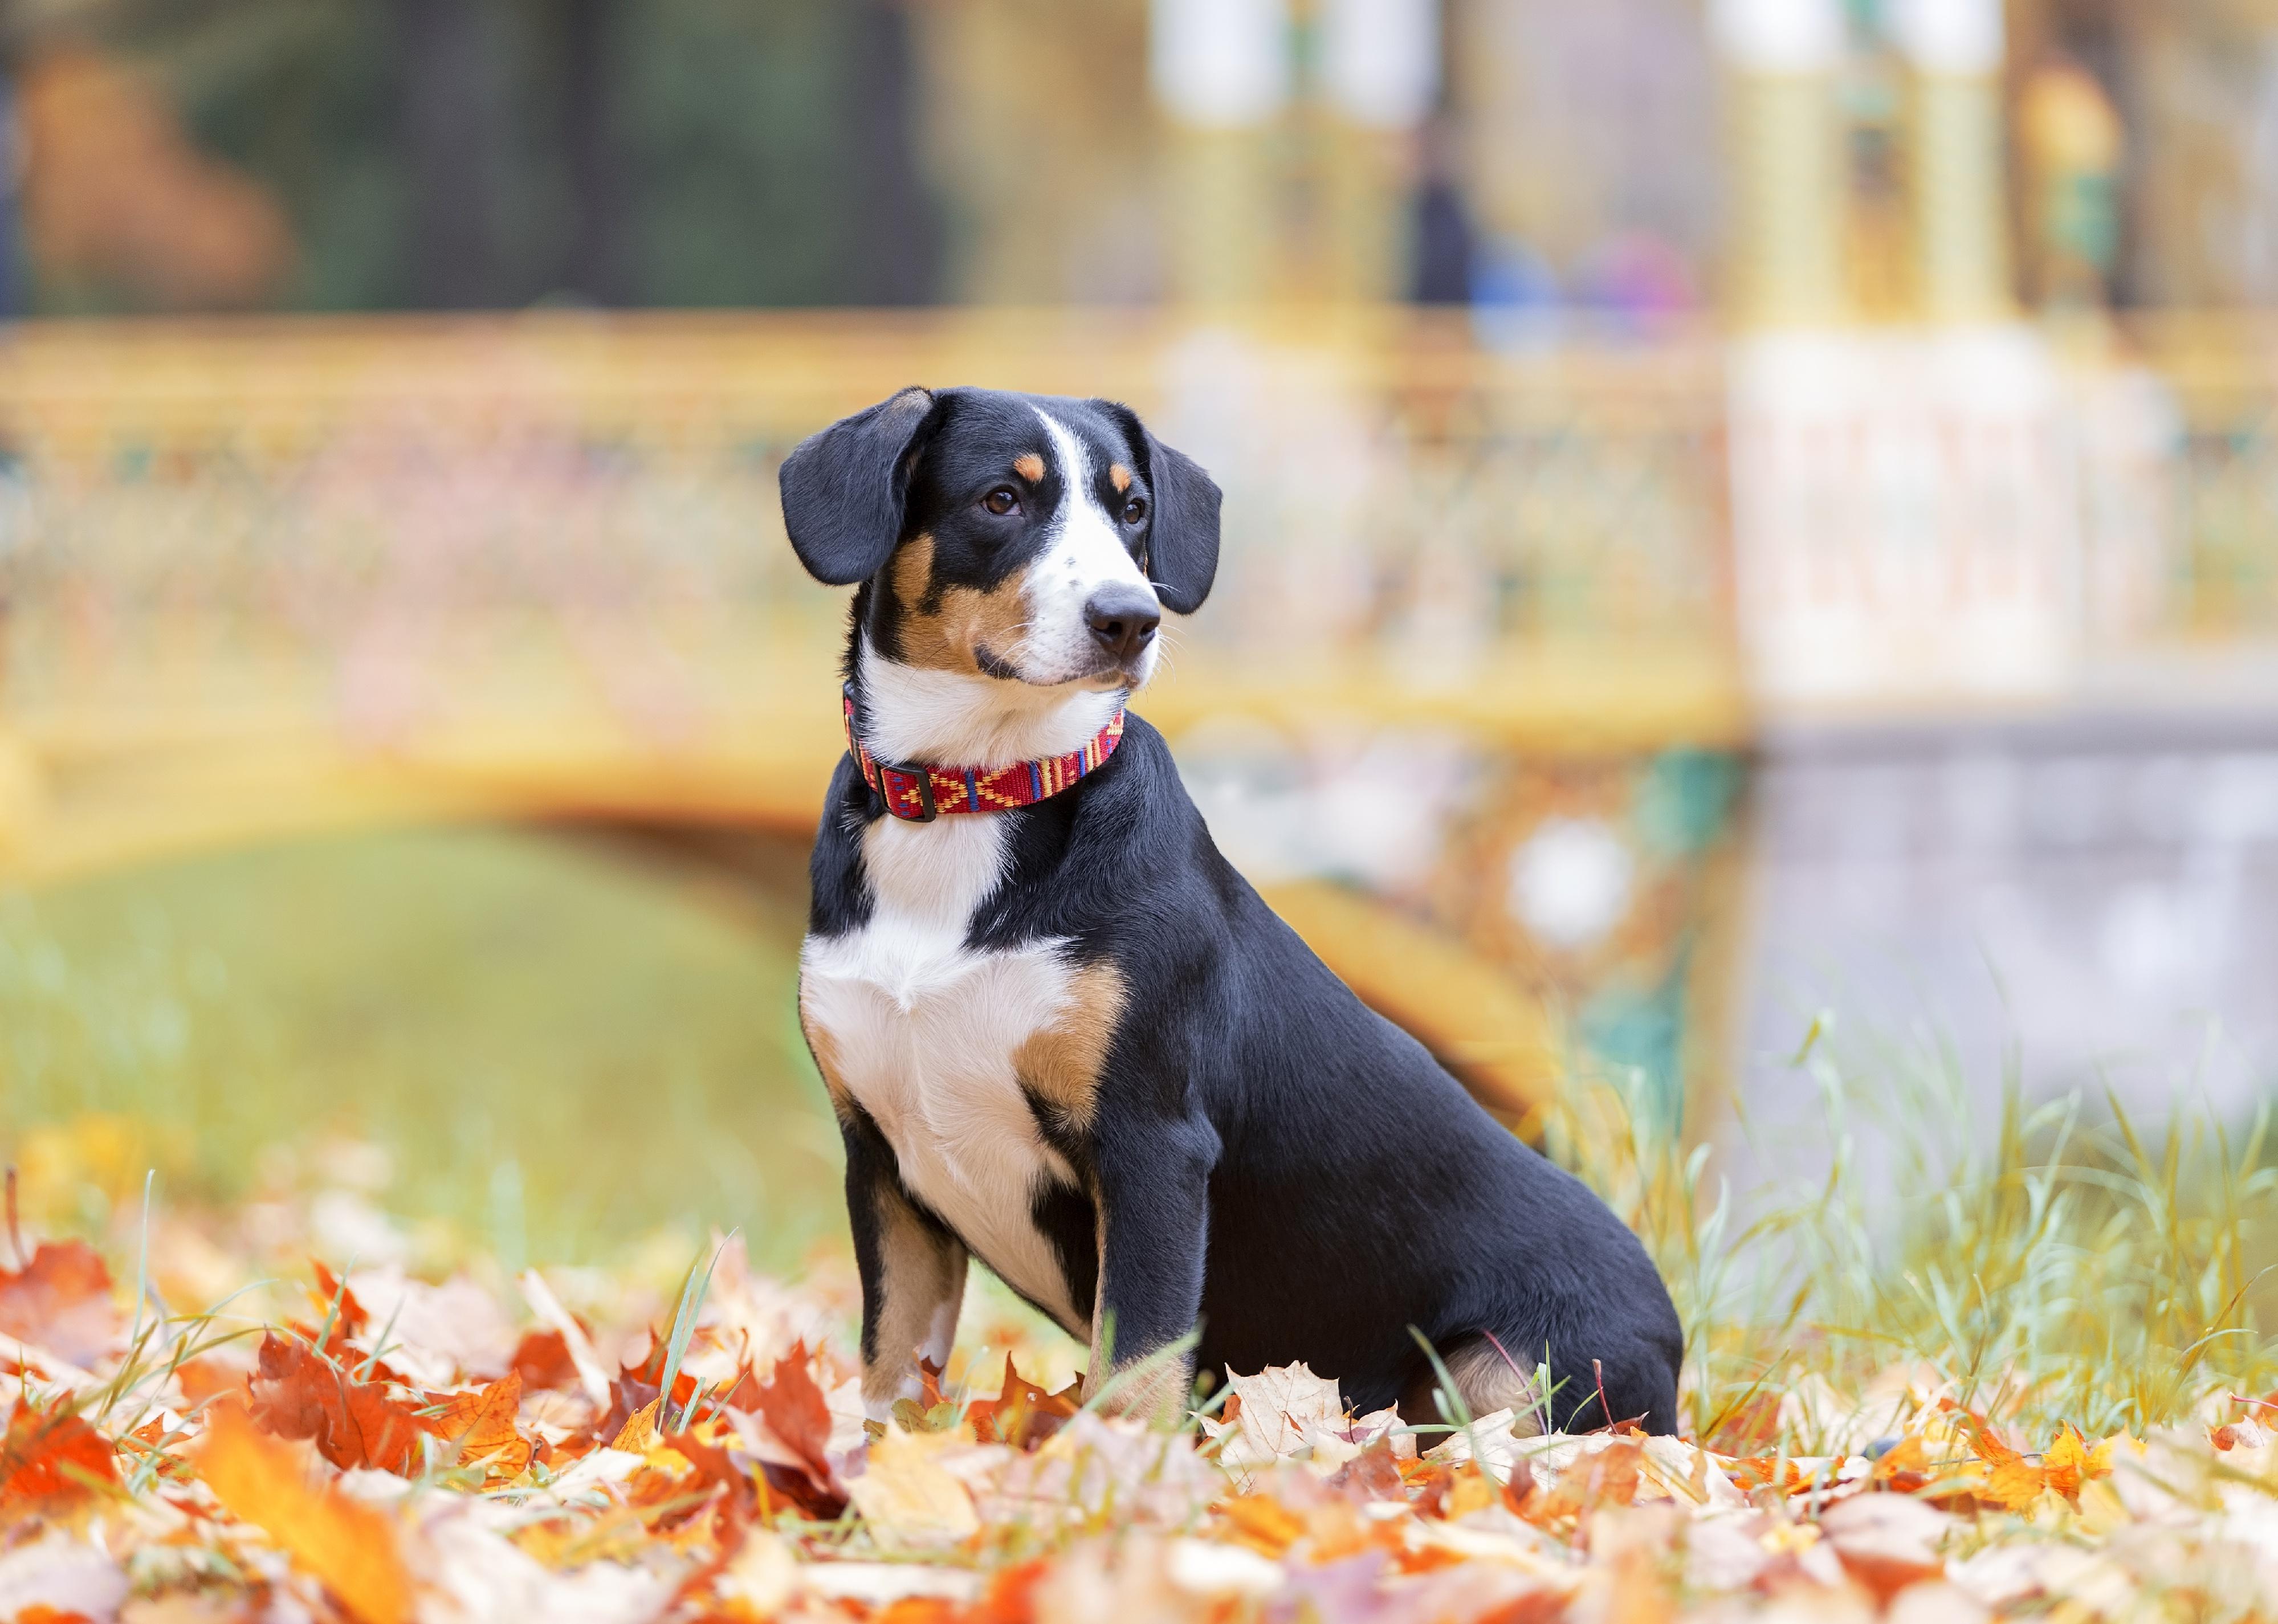 An Entlebucher Mountain Dog in an autumn park.